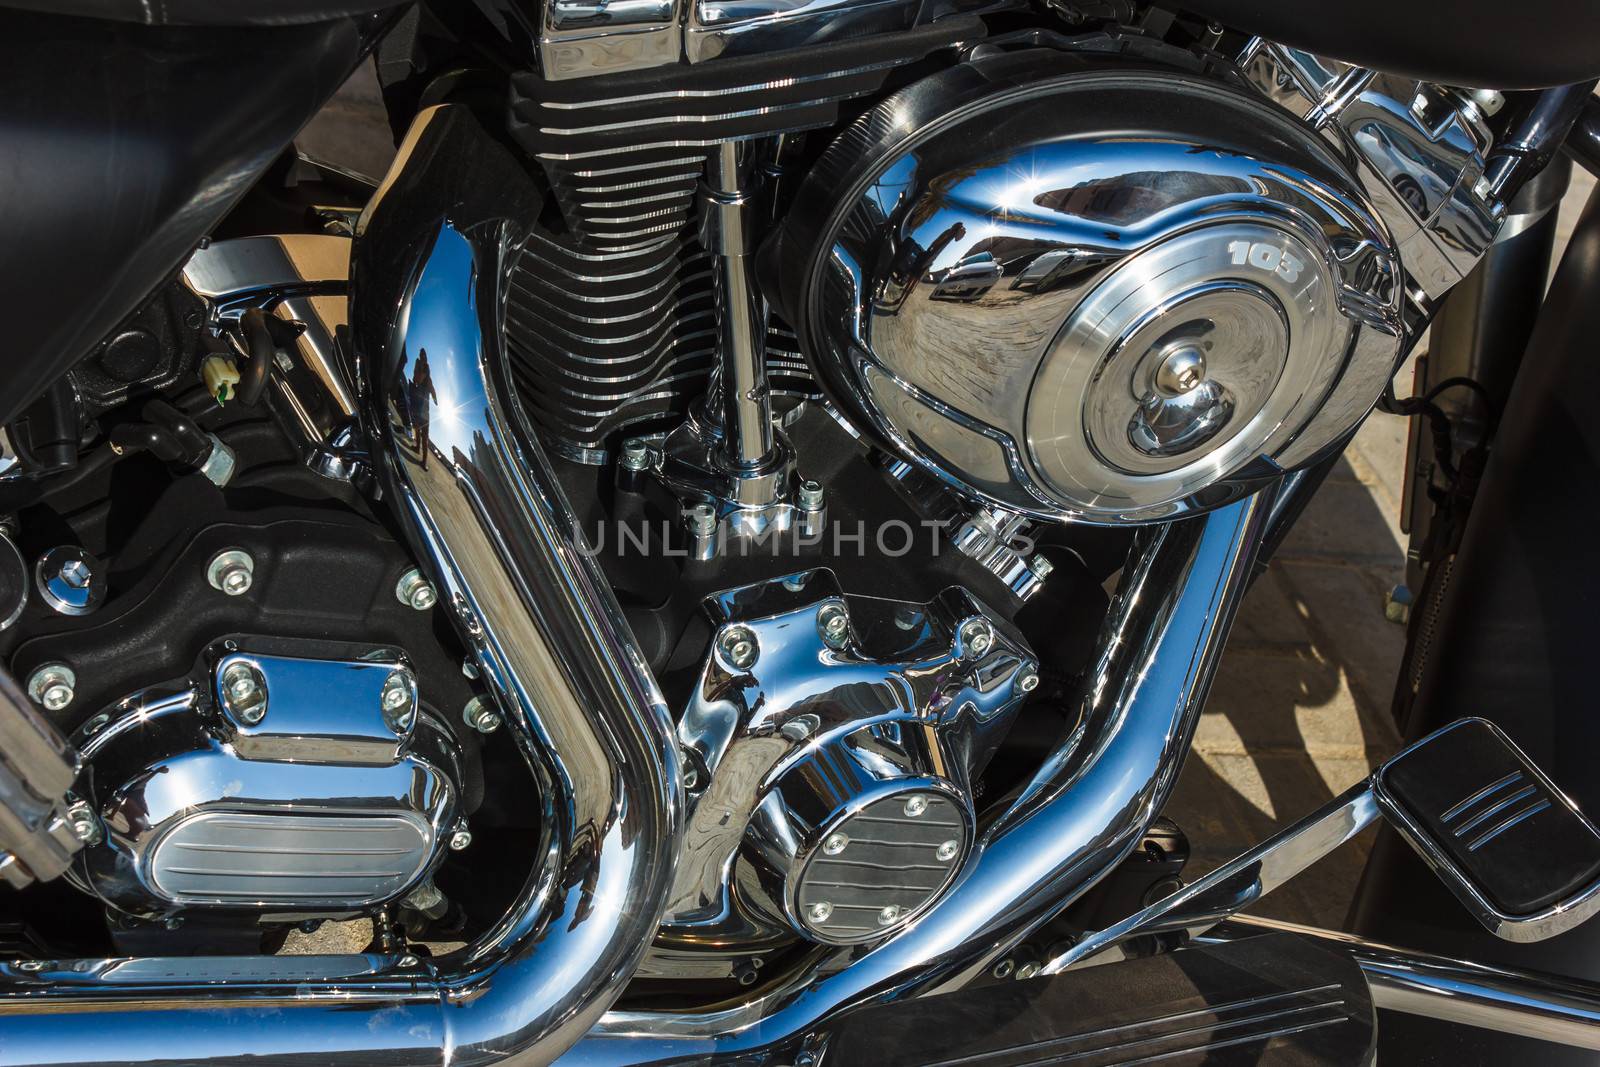 shiny nickel plated metal mechanism the motorcycle by oleg_zhukov